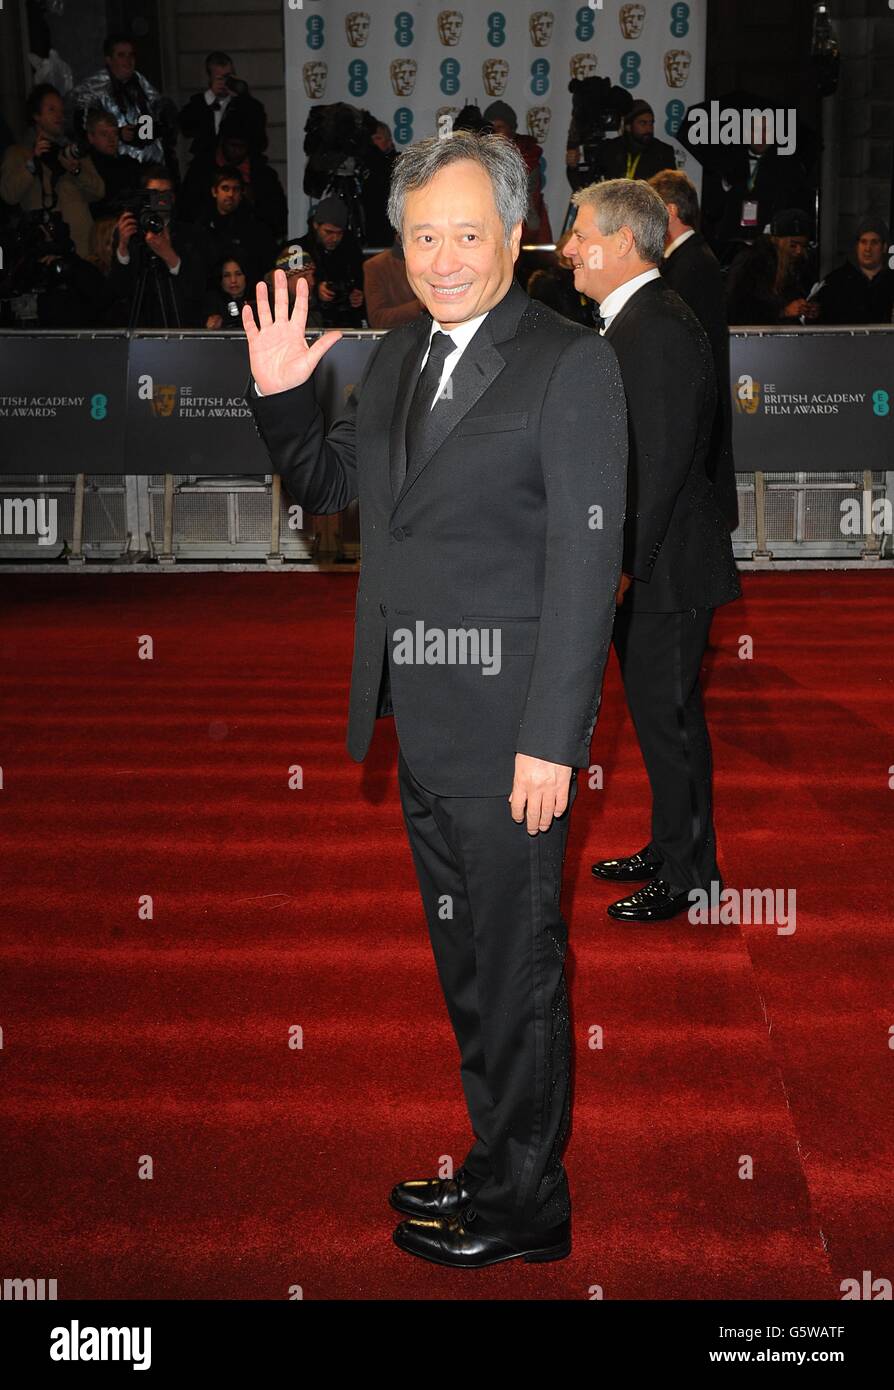 BAFTA Film Awards 2013 - Ankunft - London. Ang Lee bei der Ankunft für die British Academy Film Awards 2013 im Royal Opera House, Bow Street, London. Stockfoto